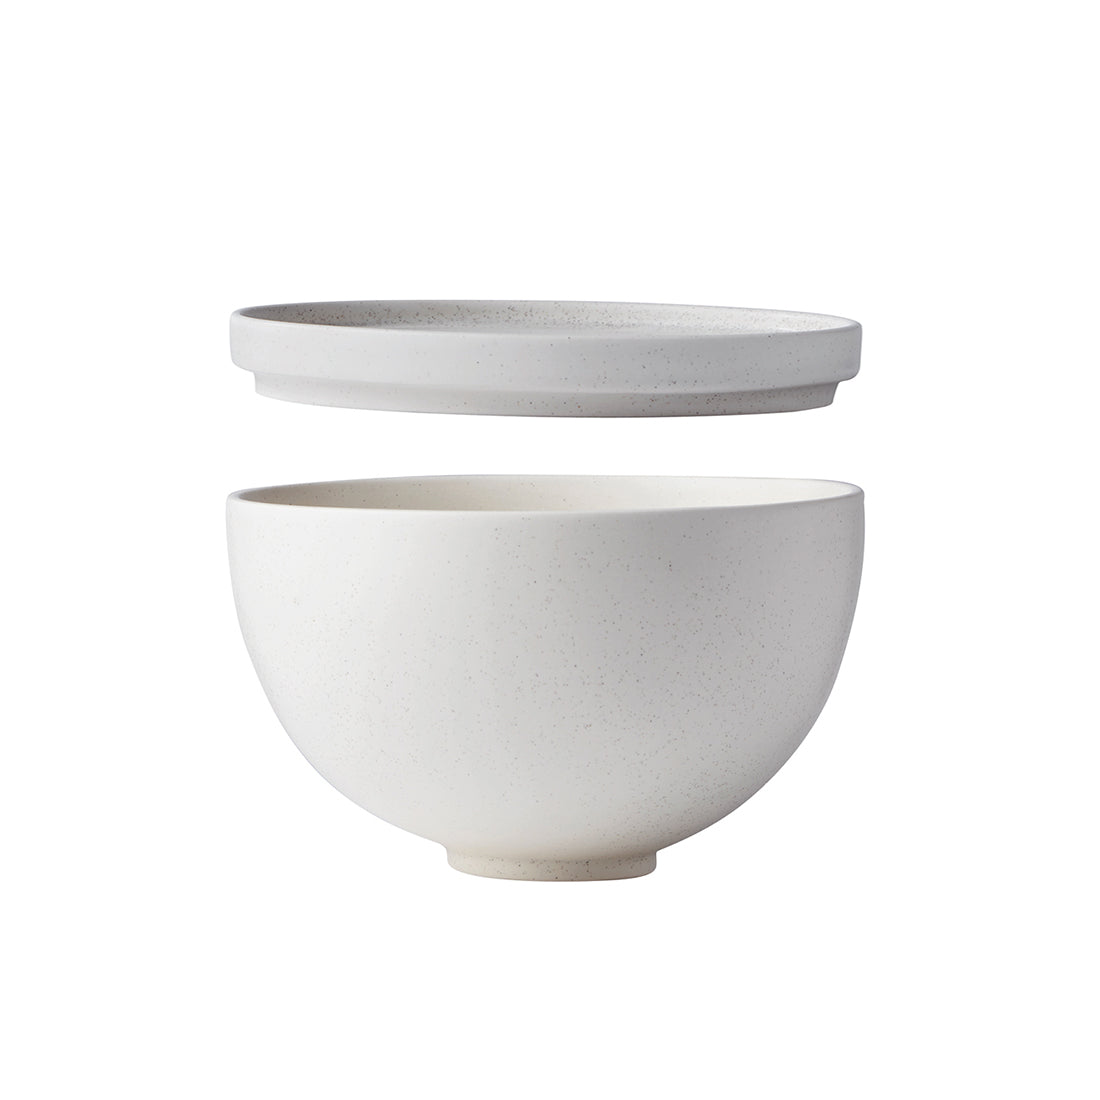 kristina dam studio setomono bowl set large shop online buy